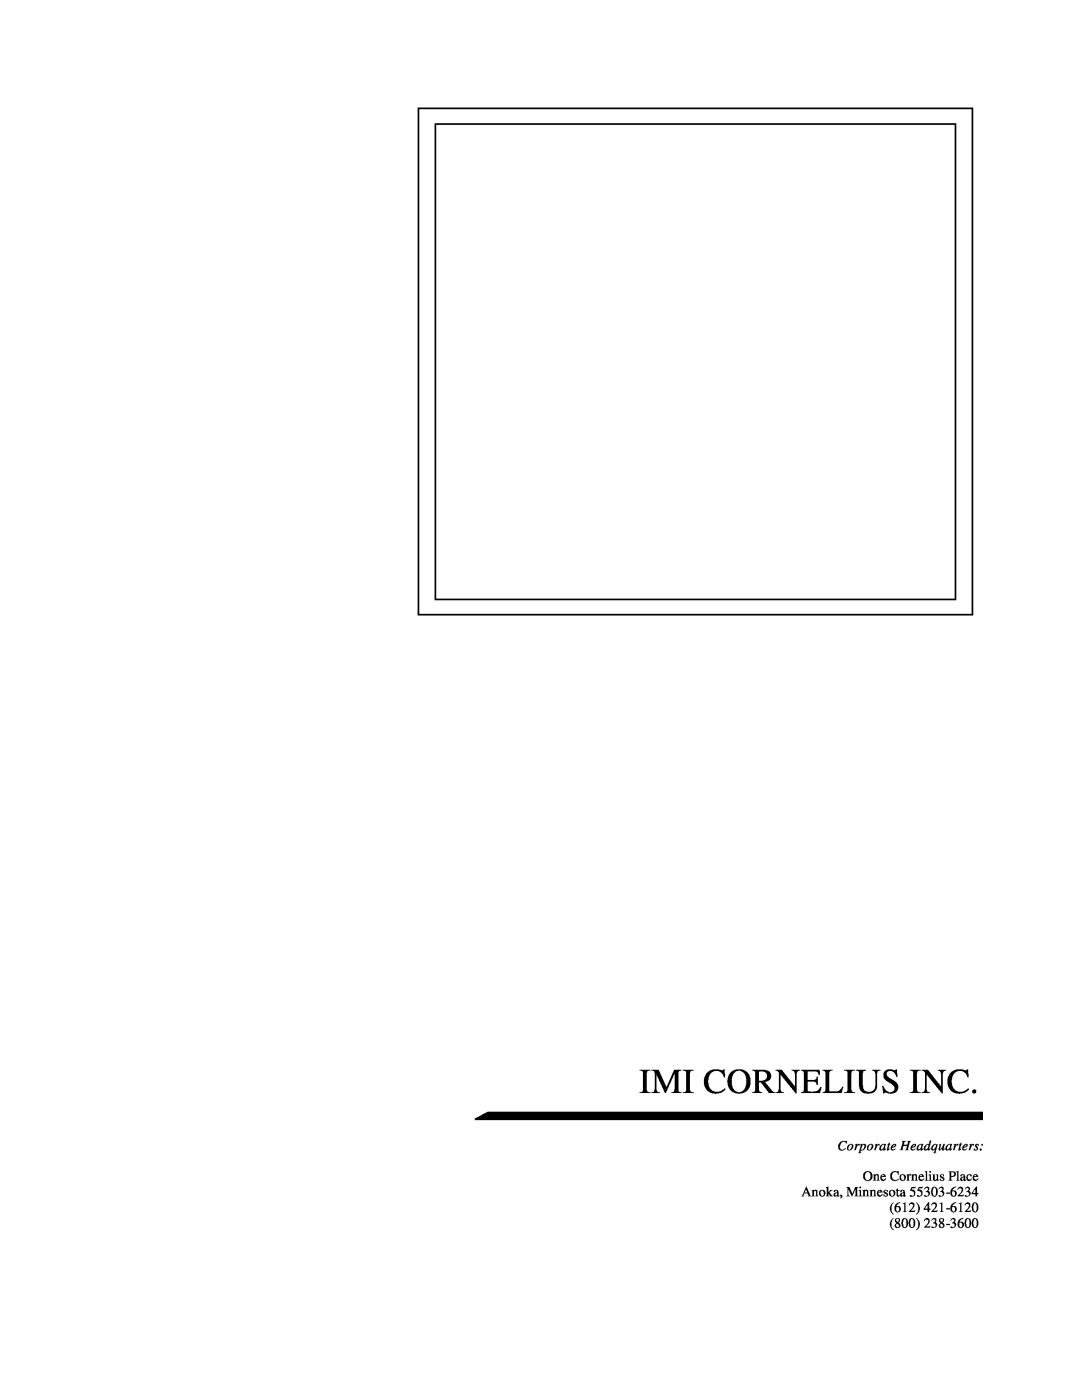 Cornelius 150 8 Valve manual Imi Cornelius Inc, Corporate Headquarters, One Cornelius Place Anoka, Minnesota 